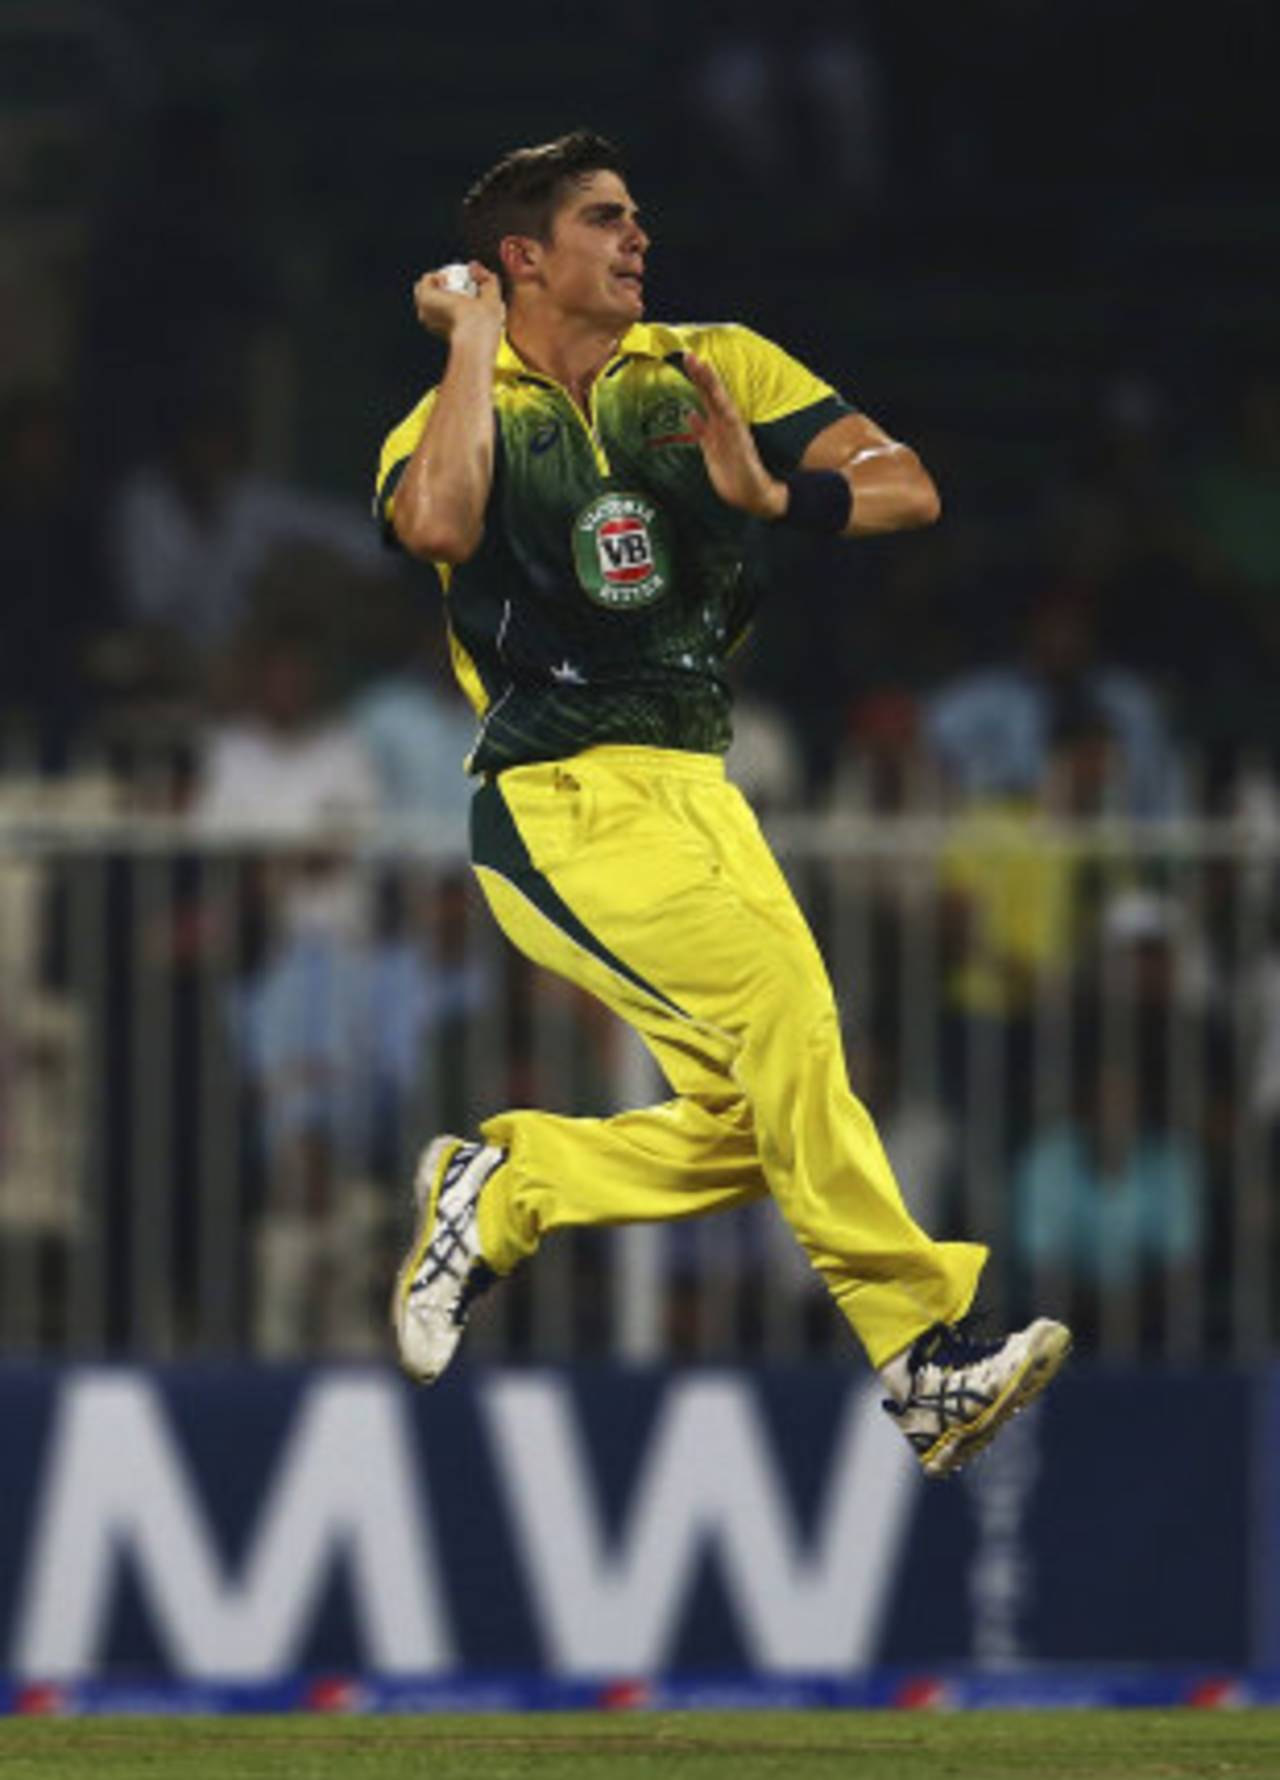 Sean Abbott leaps into his delivery stride, Pakistan v Australia, 1st ODI, Sharjah, October 7, 2014